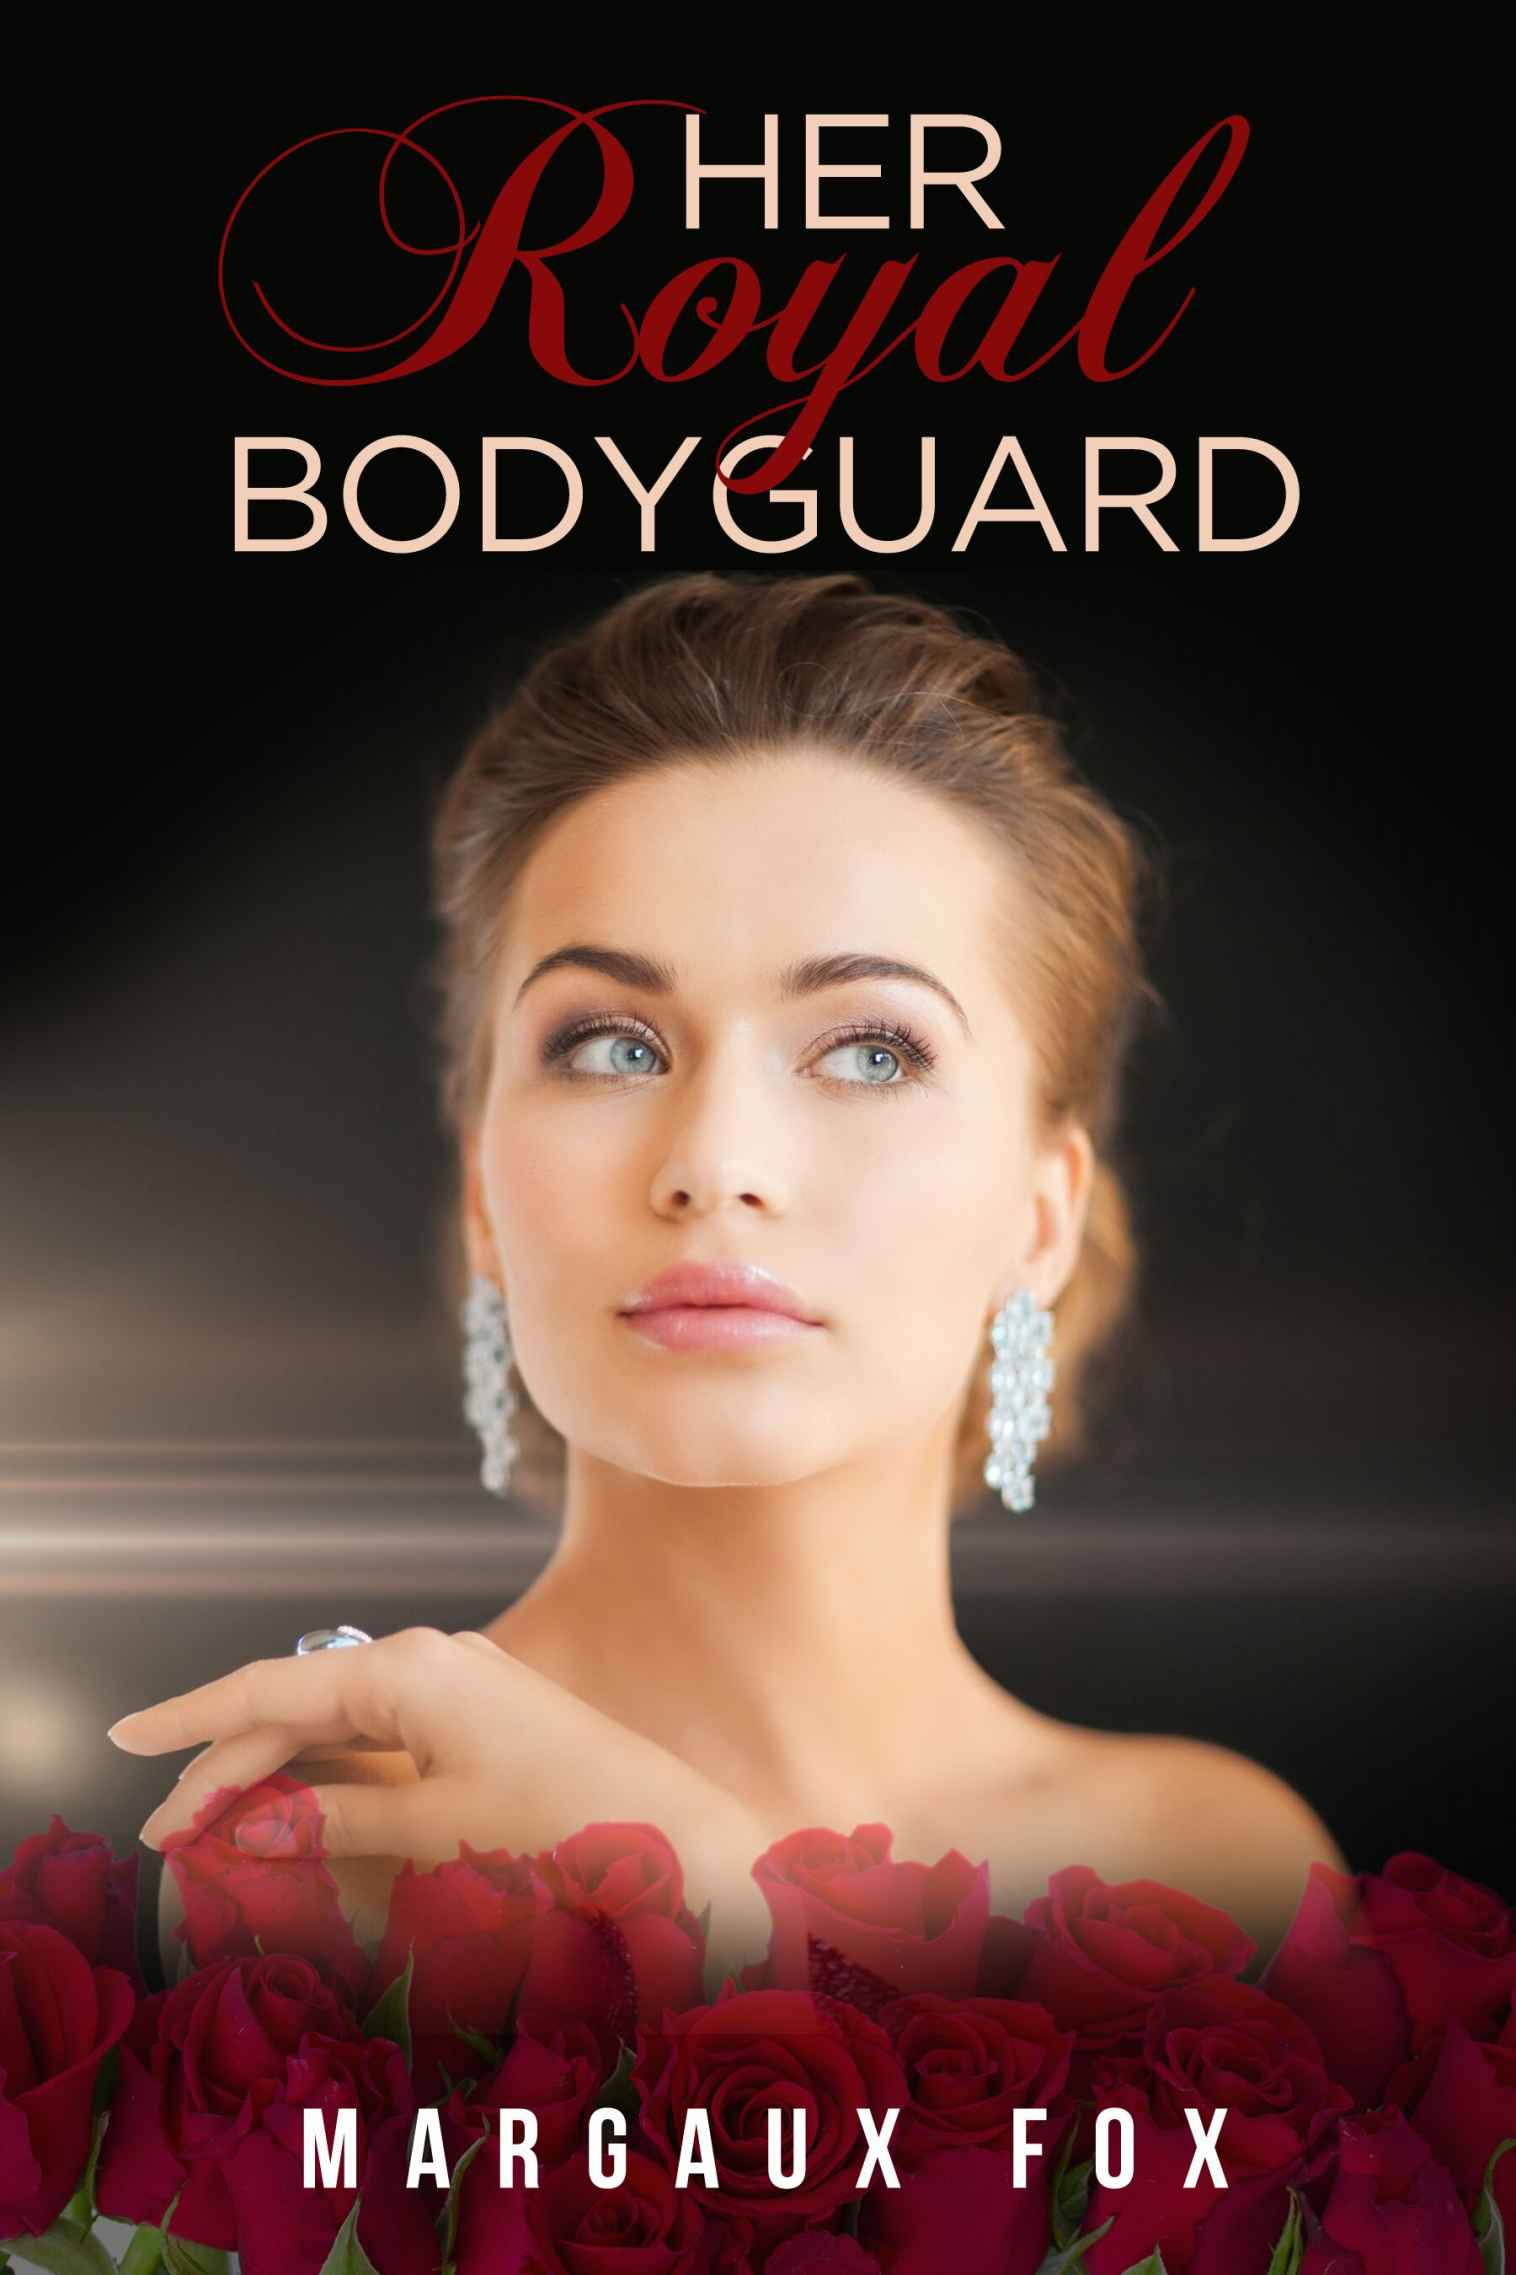 Her Royal Bodyguard: A lesbian romance